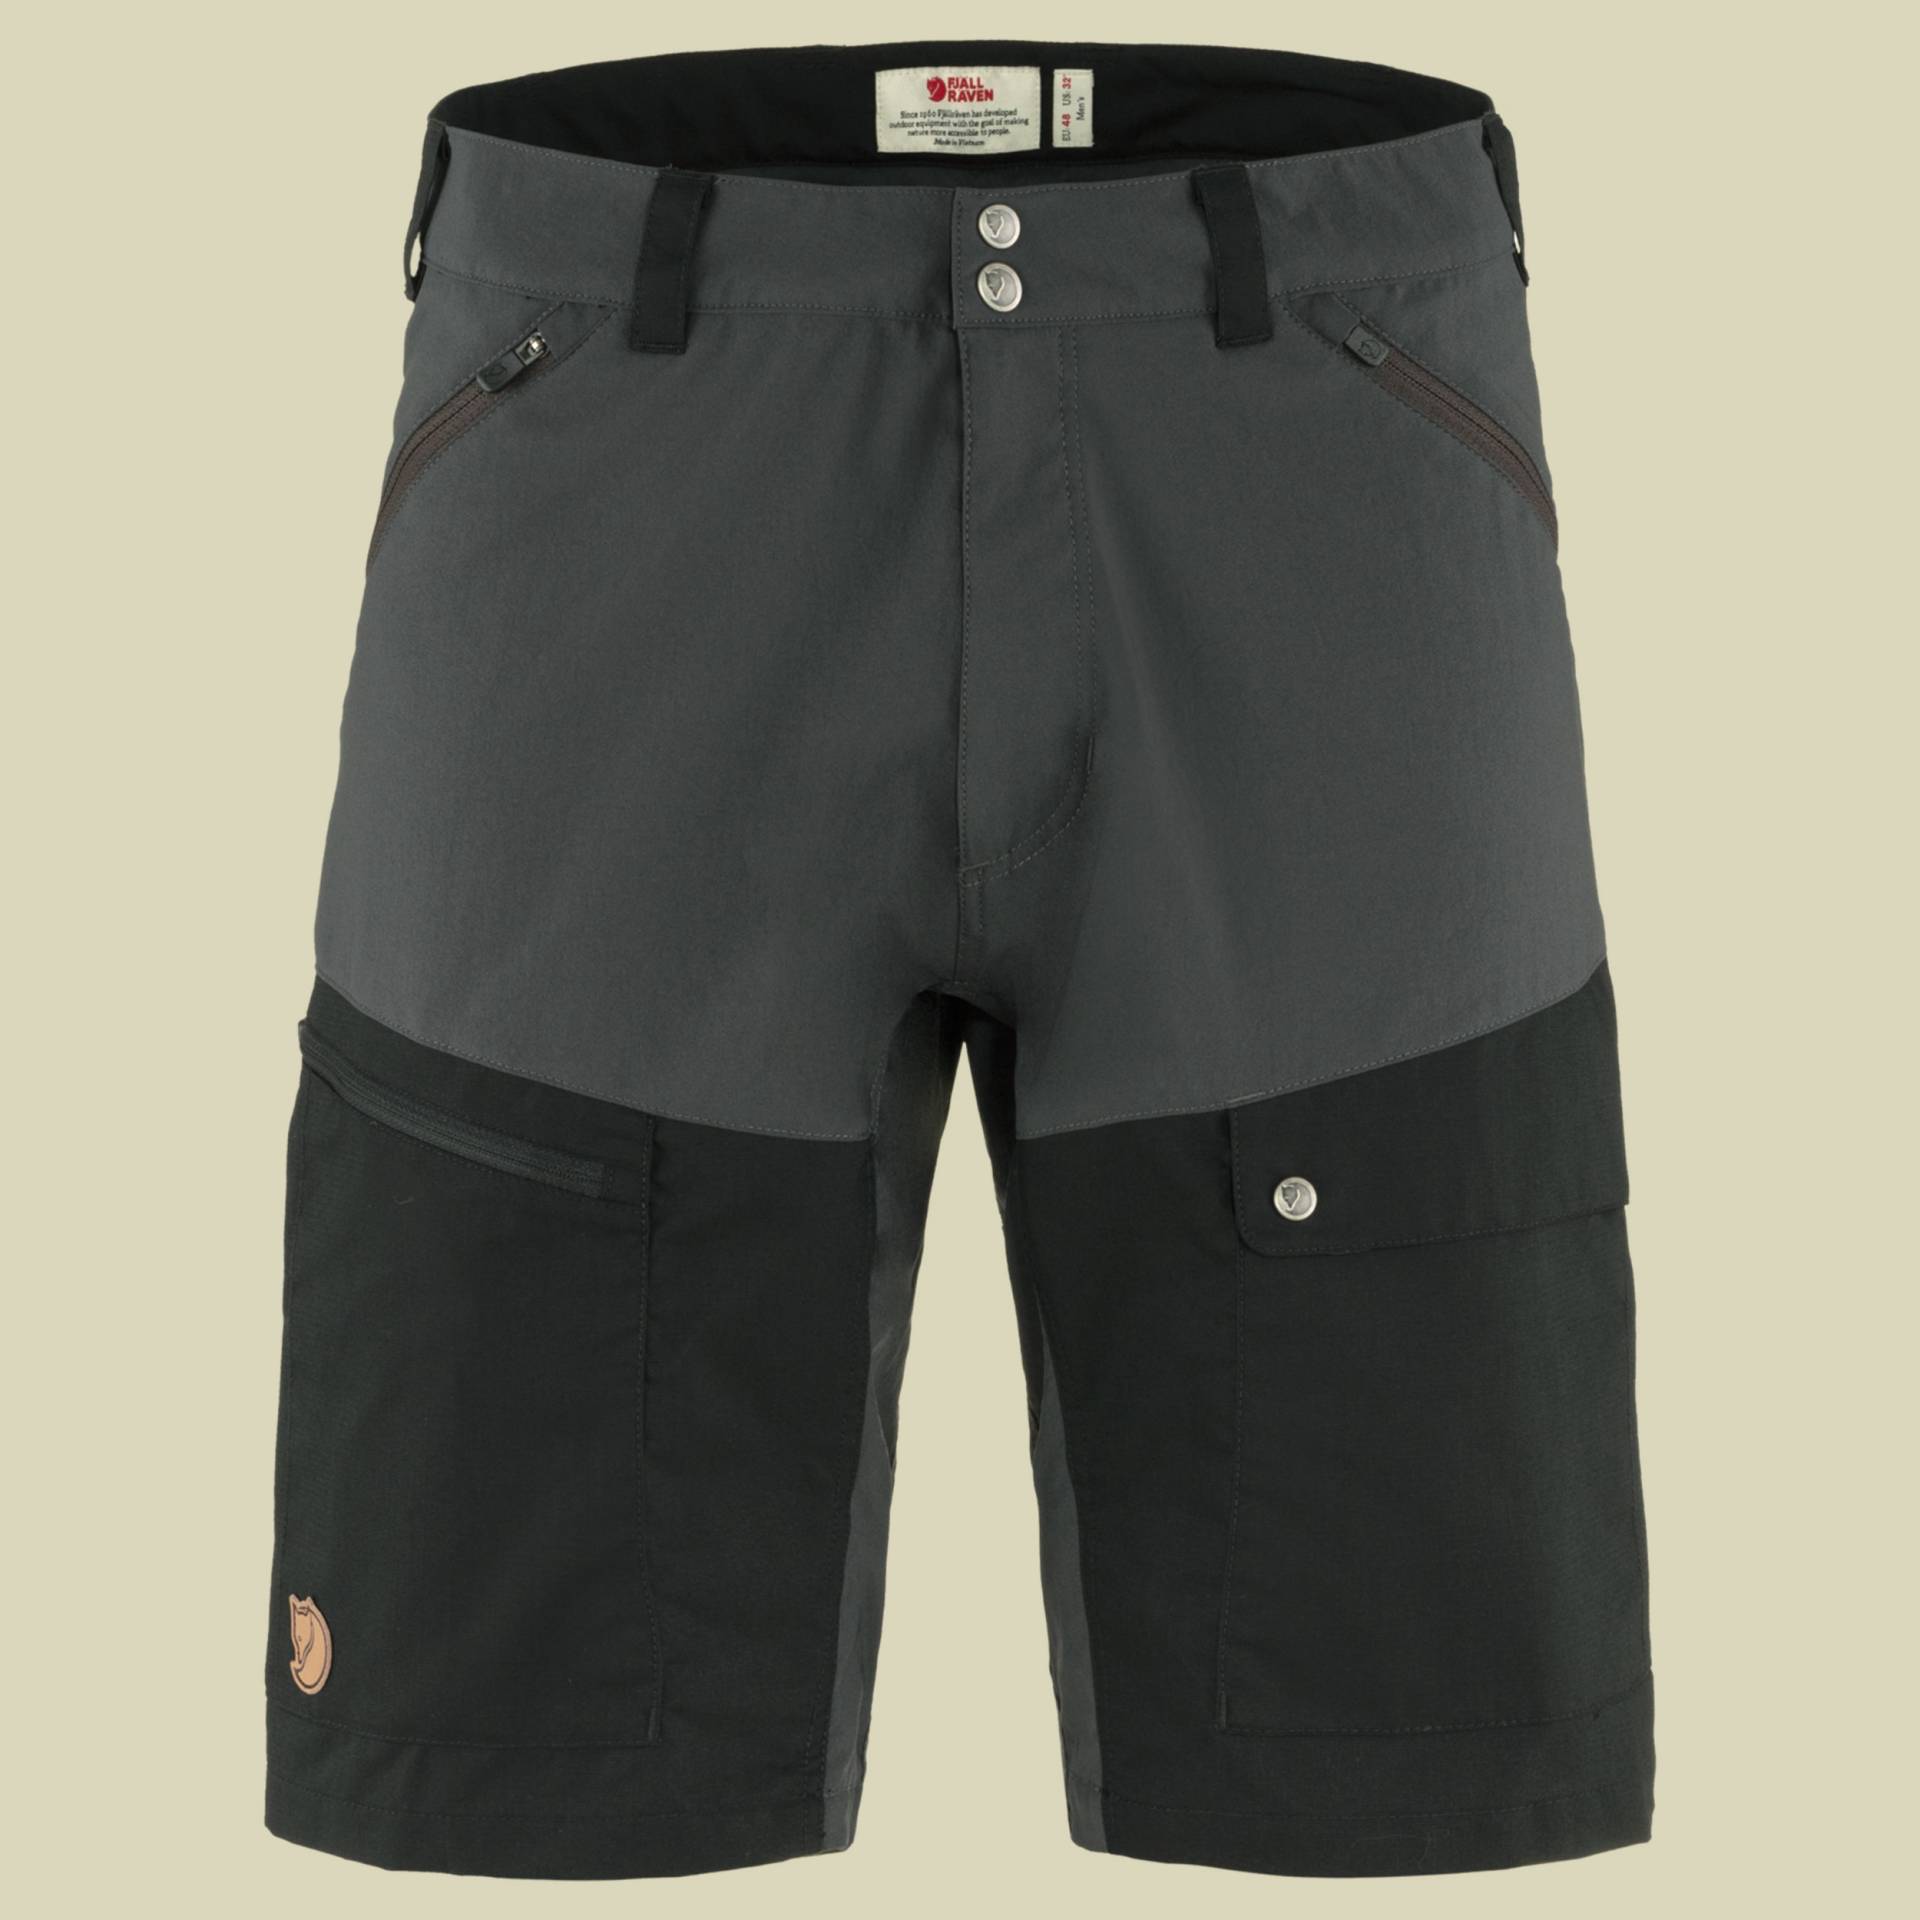 Abisko Midsummer Shorts Men Größe 46 Farbe dark grey/black von Fjällräven